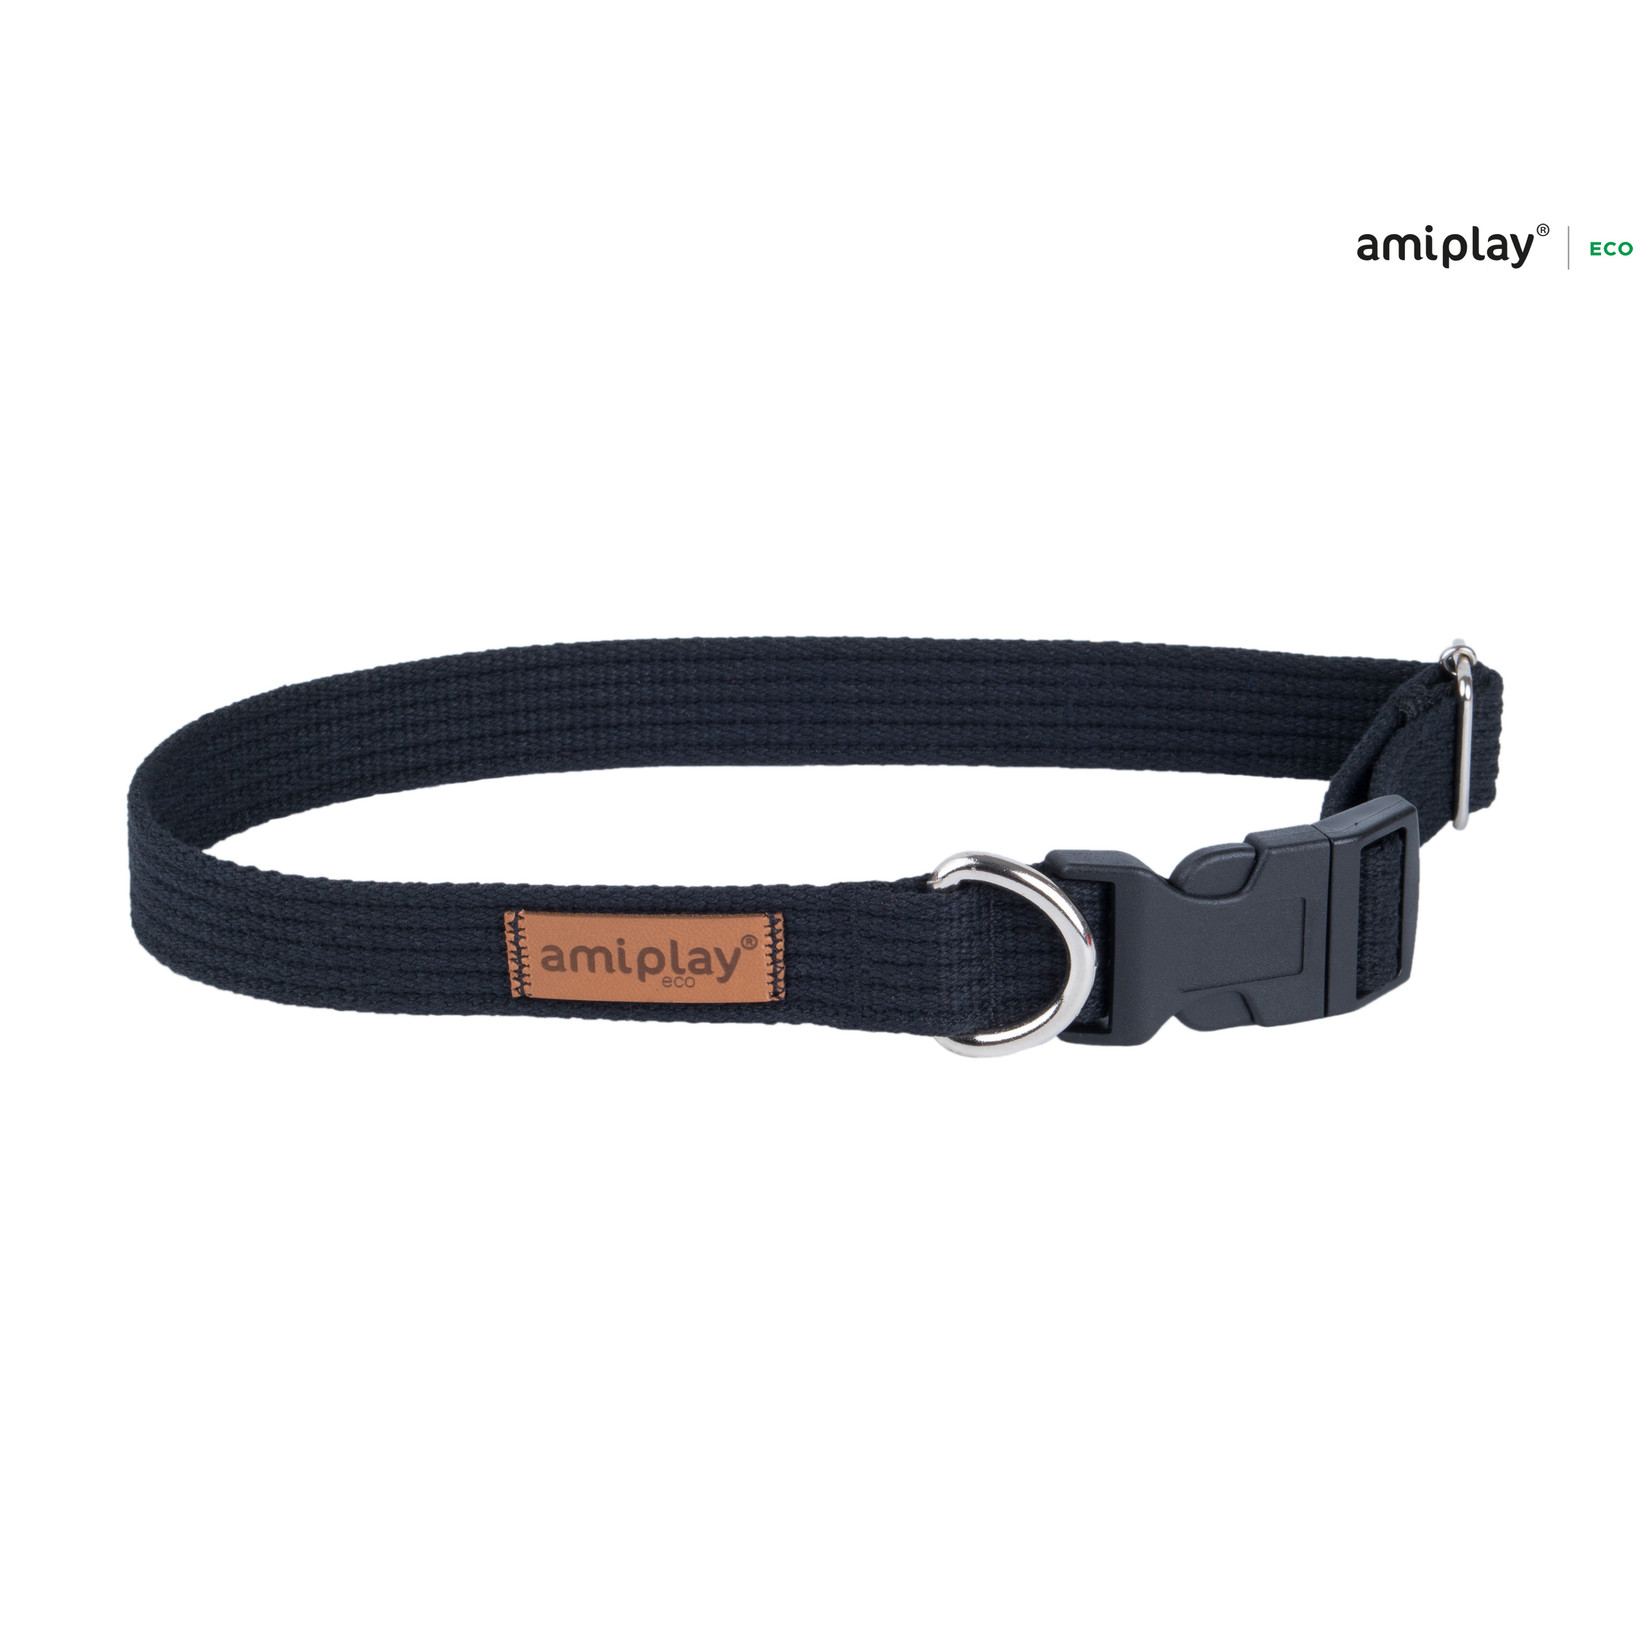 Amiplay Halsband verstelbaar Cotton zwart maat-S / 28-40x1,5cm